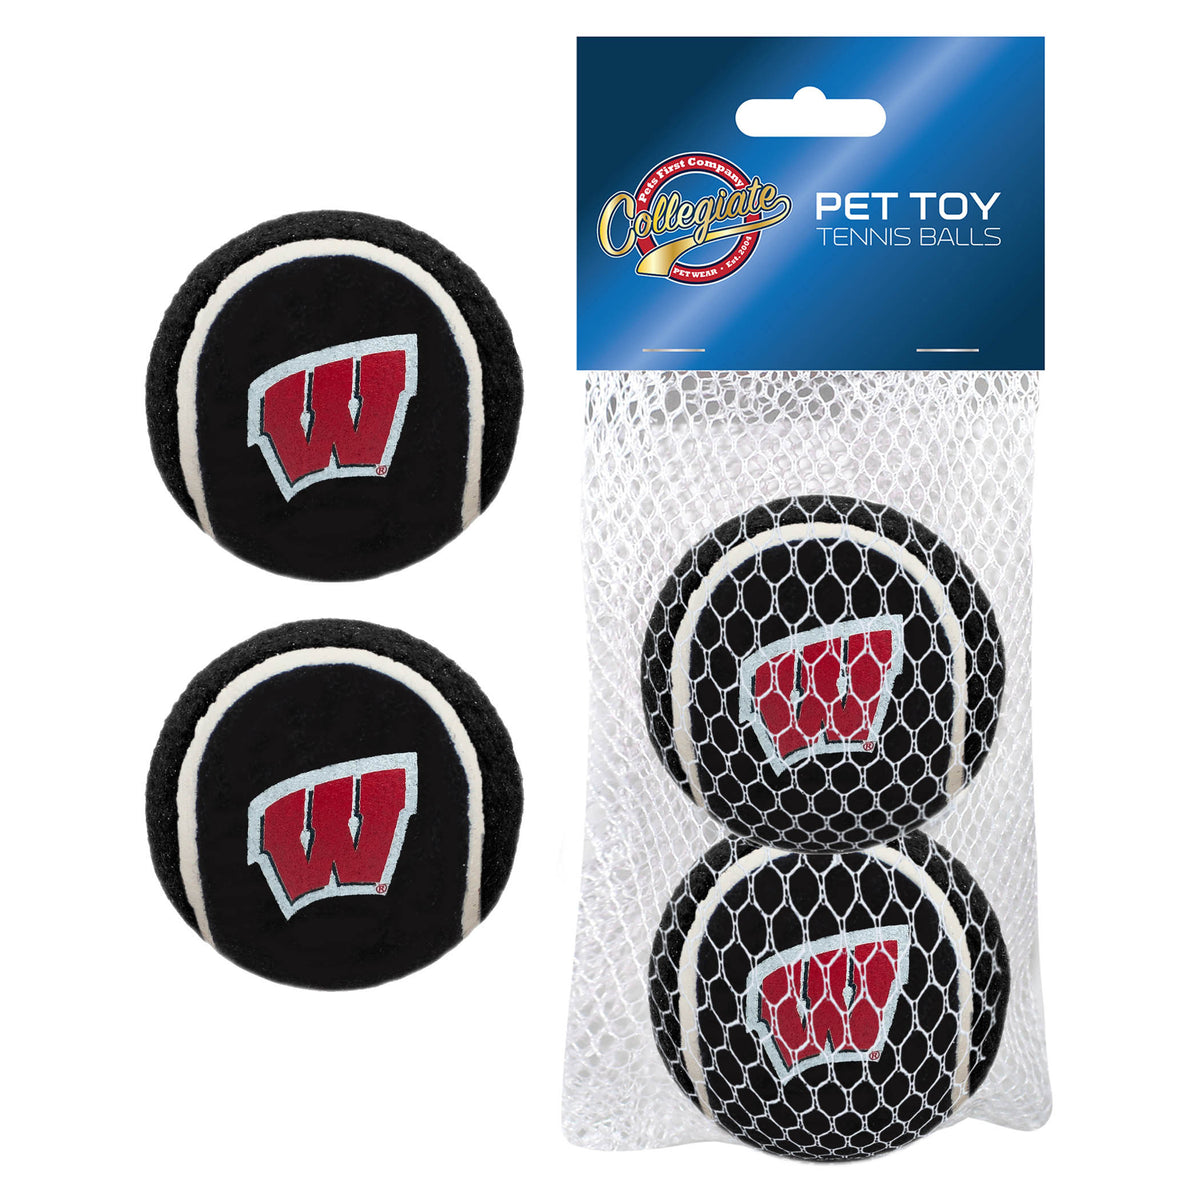 WI Badgers Tennis Balls - 2 pack